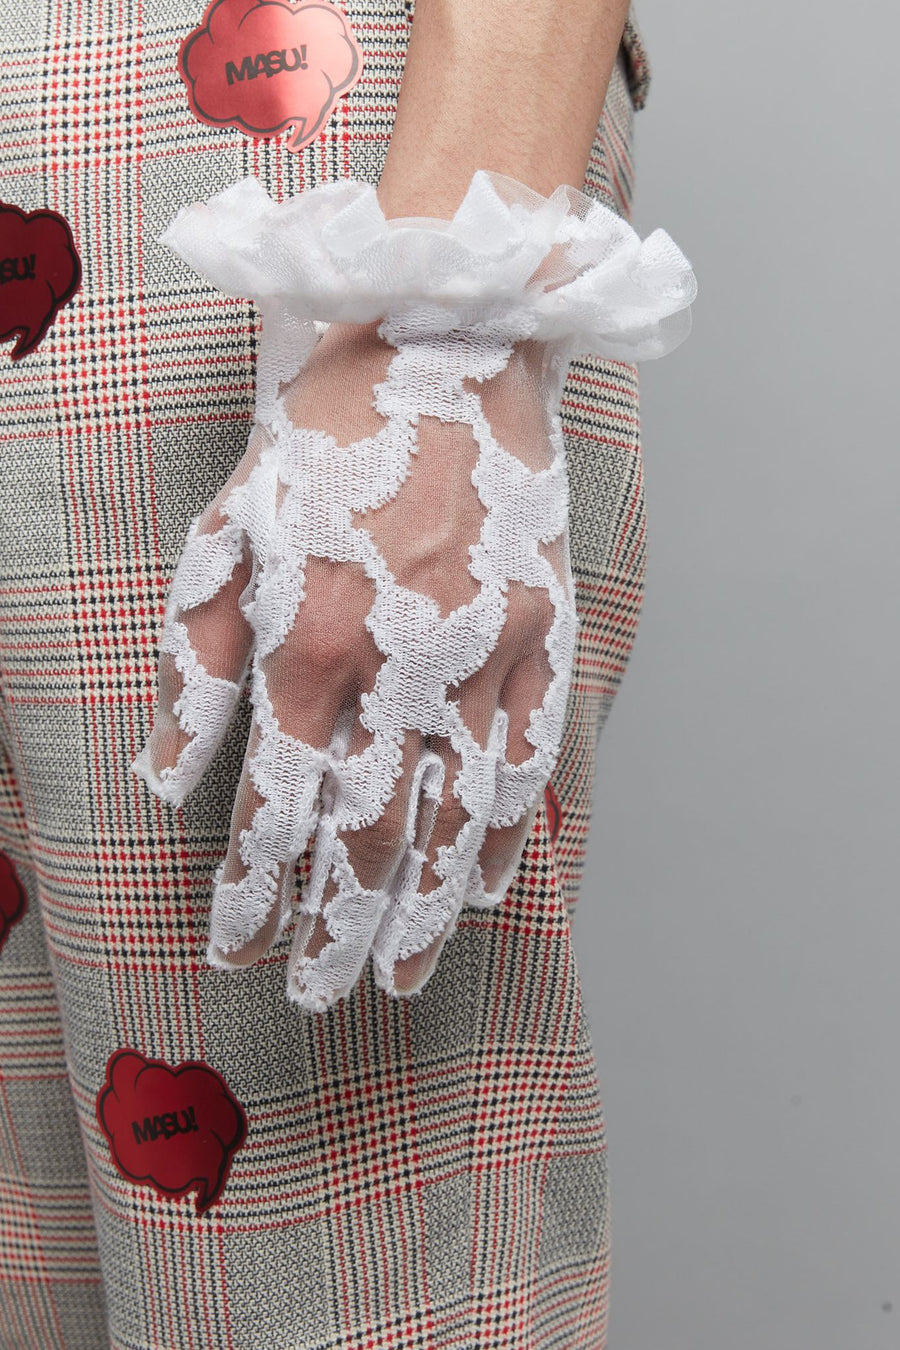 Masu's Angel Lace Glove White Mail Order | Palette Art Alive 